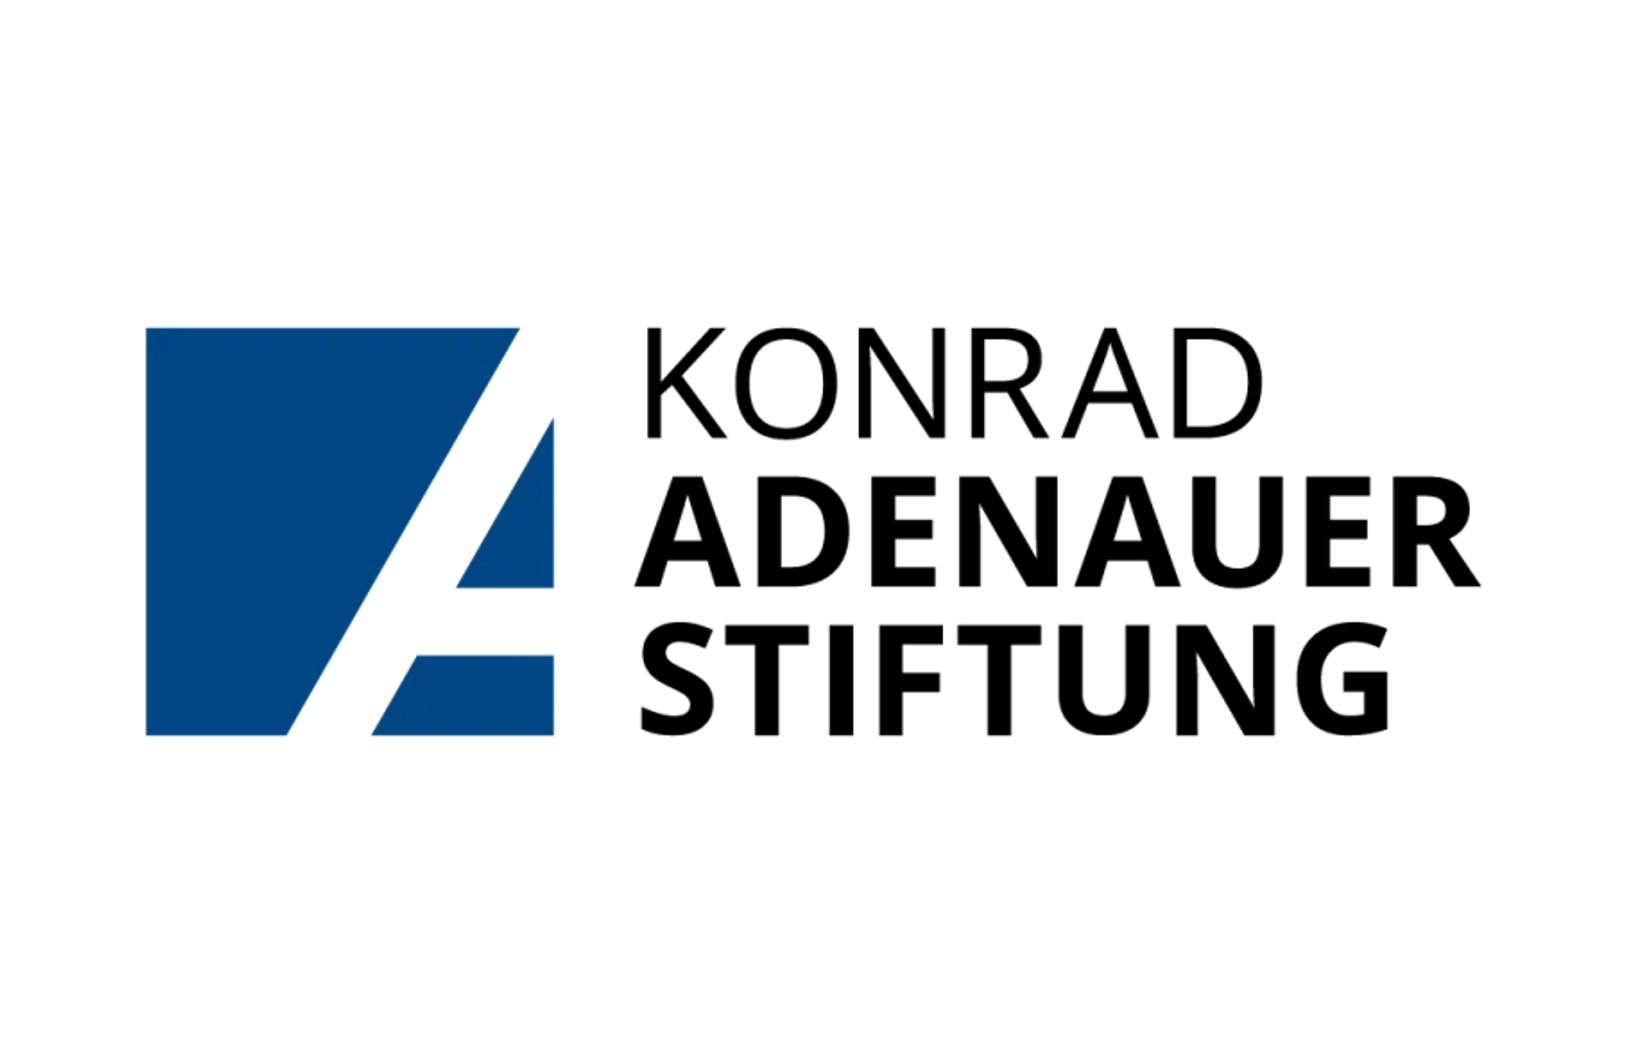 Konrad-Adenauer-Stiftung - Foundation Office Korea Logo